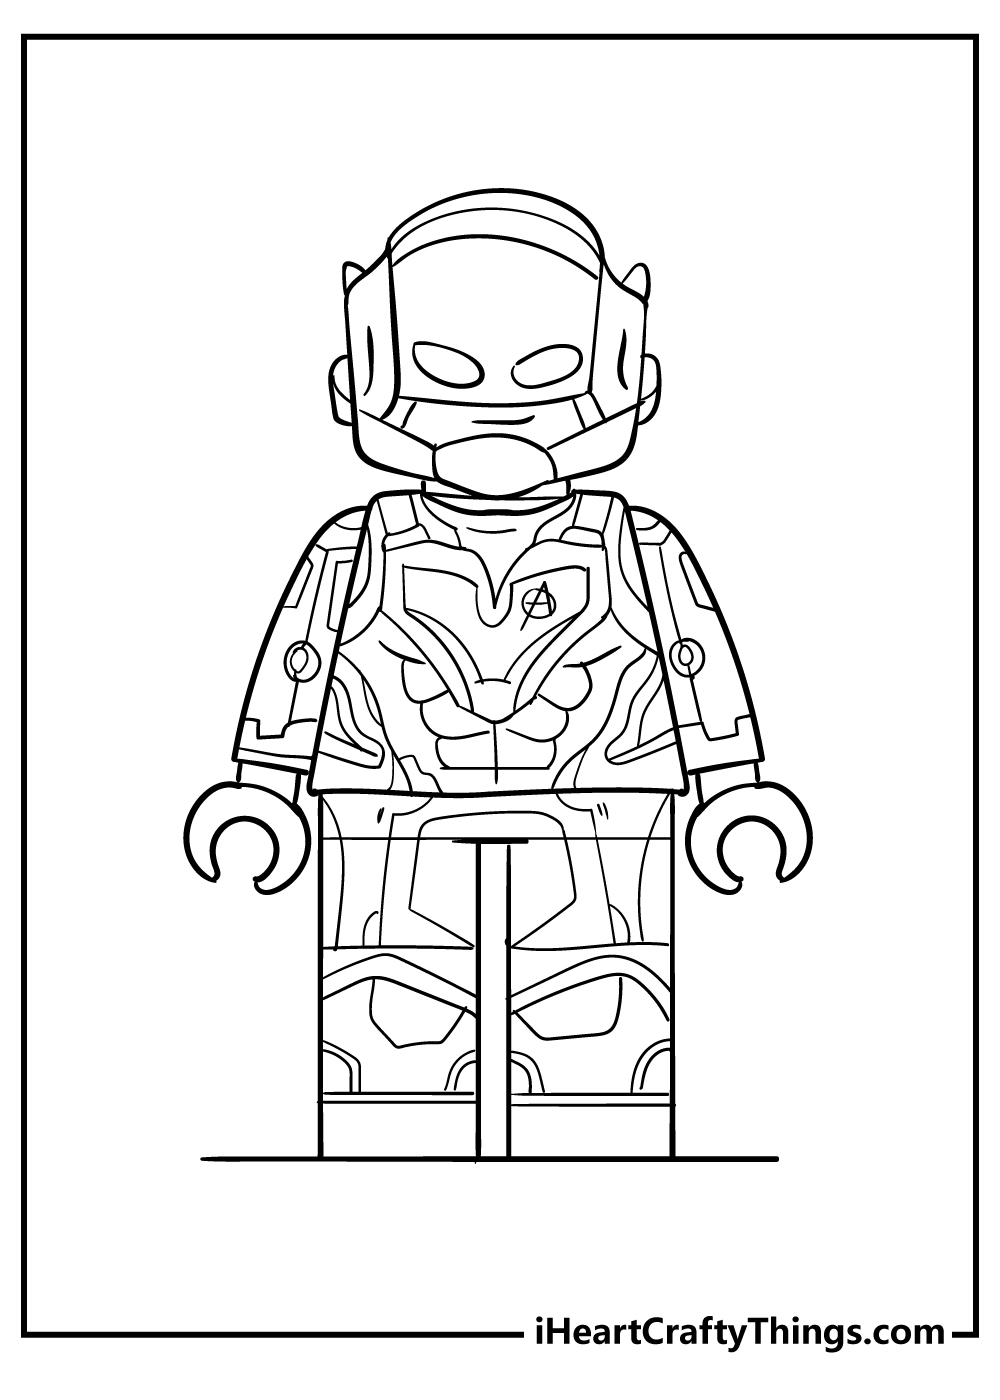 Lego Avengers Coloring Original Sheet for children free download